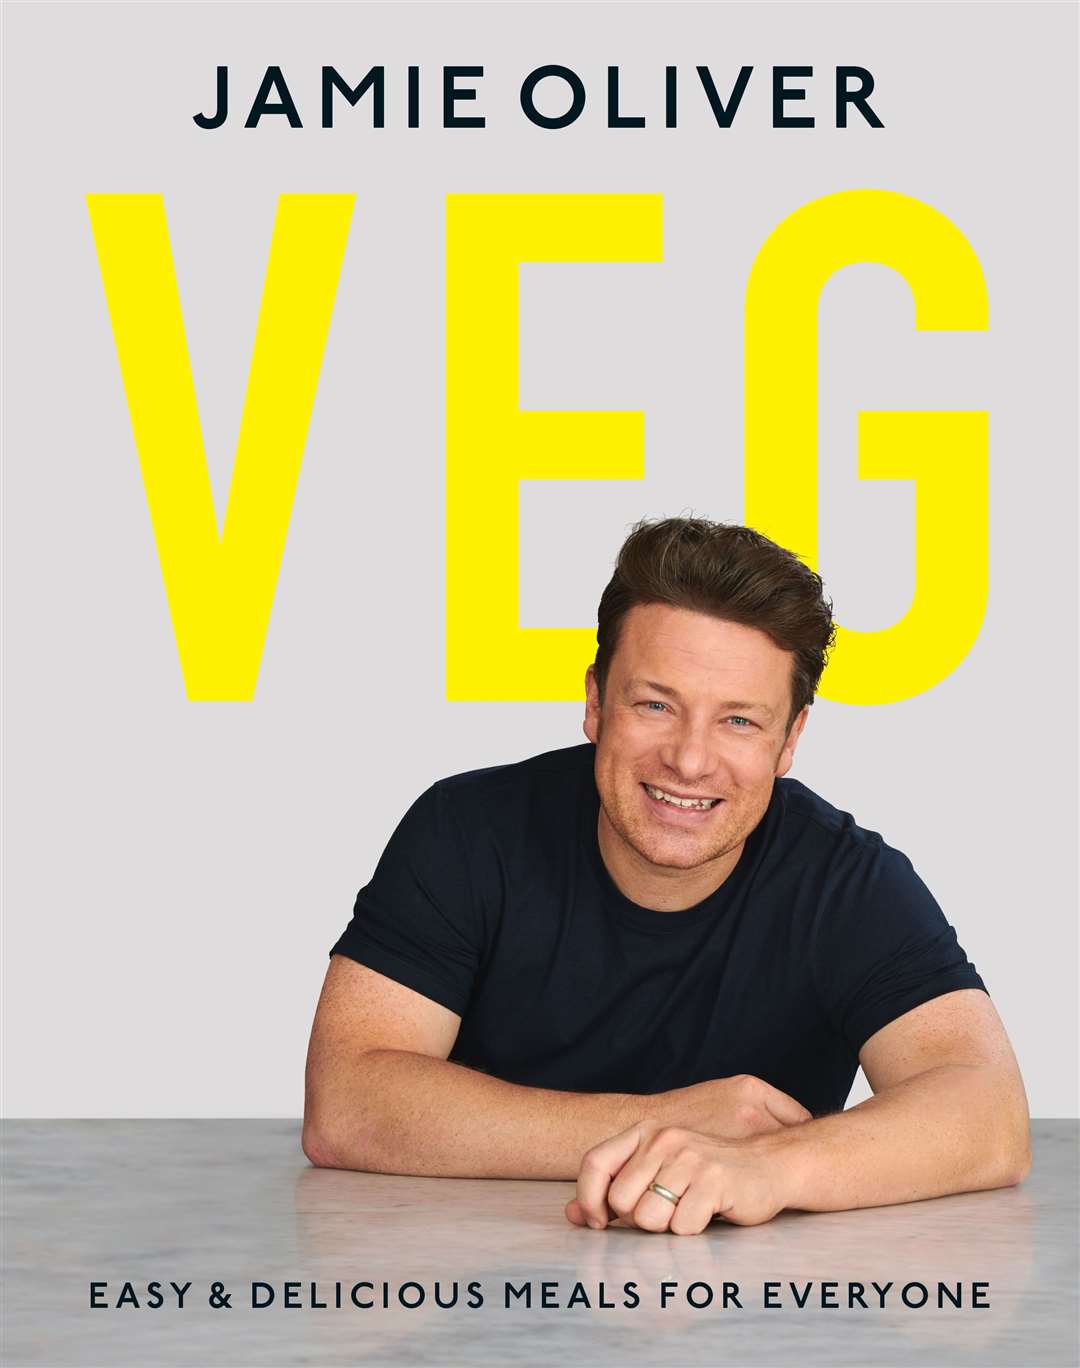 Jamie Oliver's Veg. Picture: Paul Stuart/PA